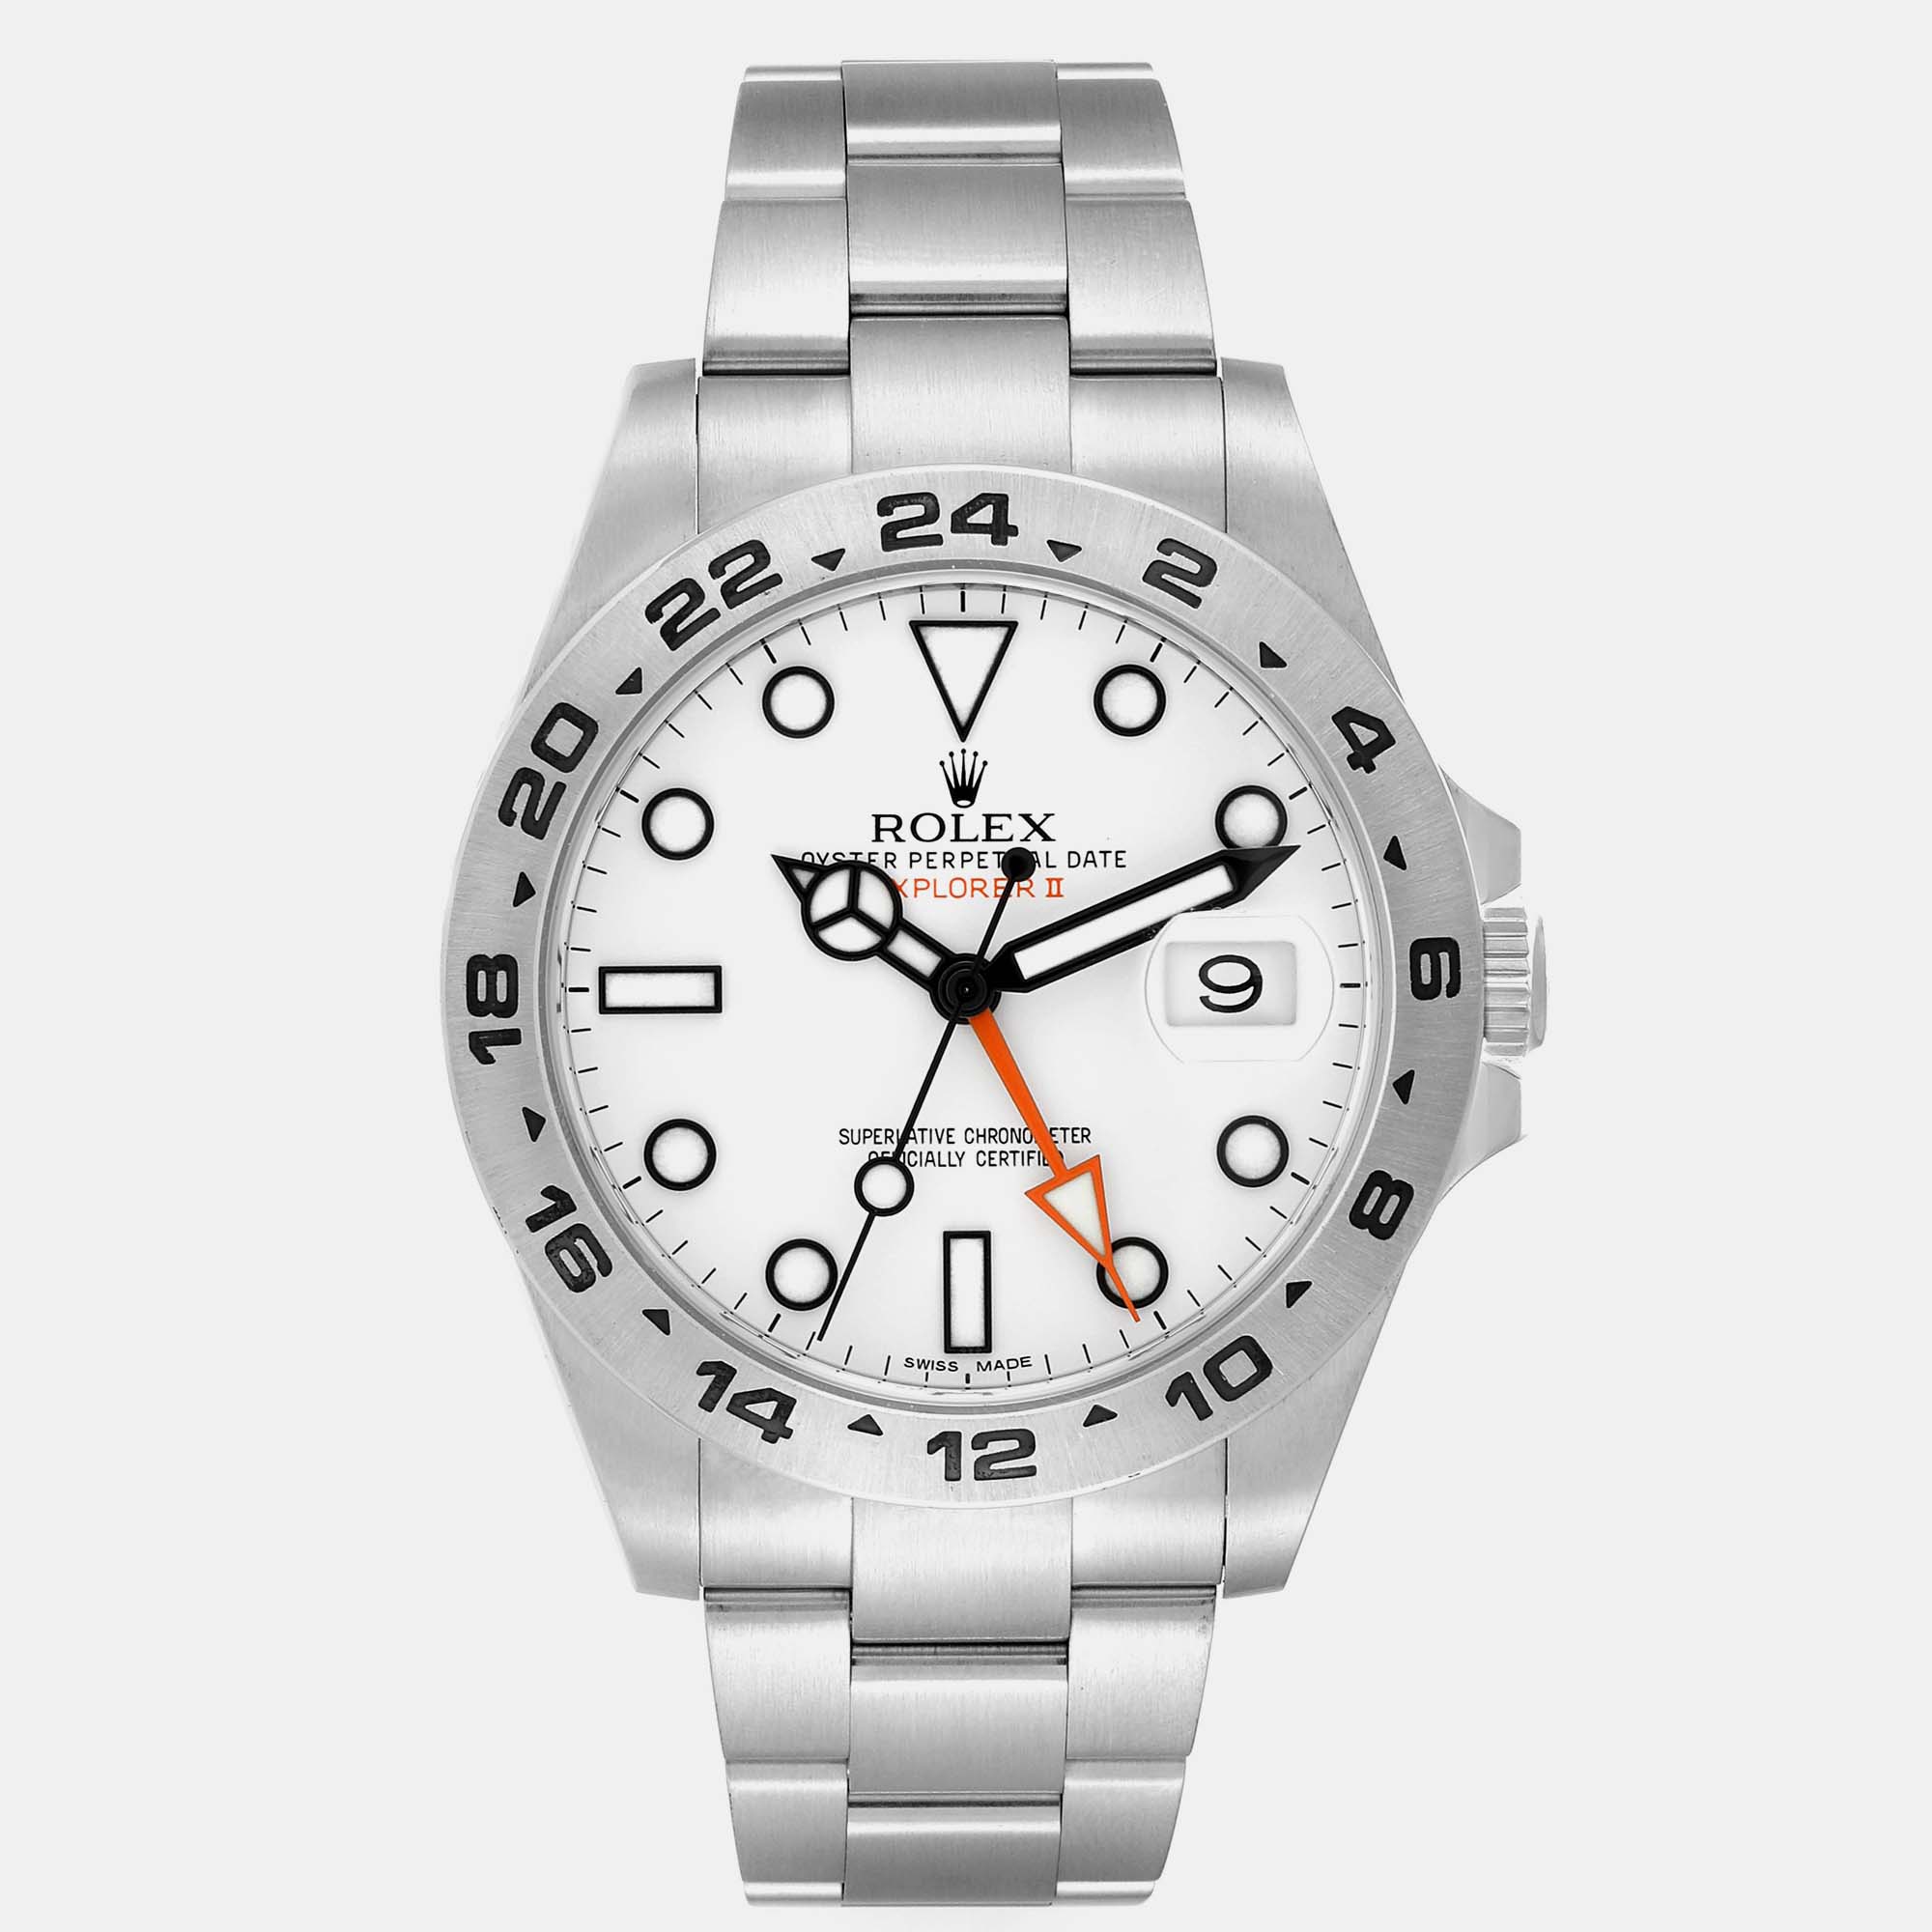 Rolex explorer ii white dial orange hand steel men's watch 216570 42 mm